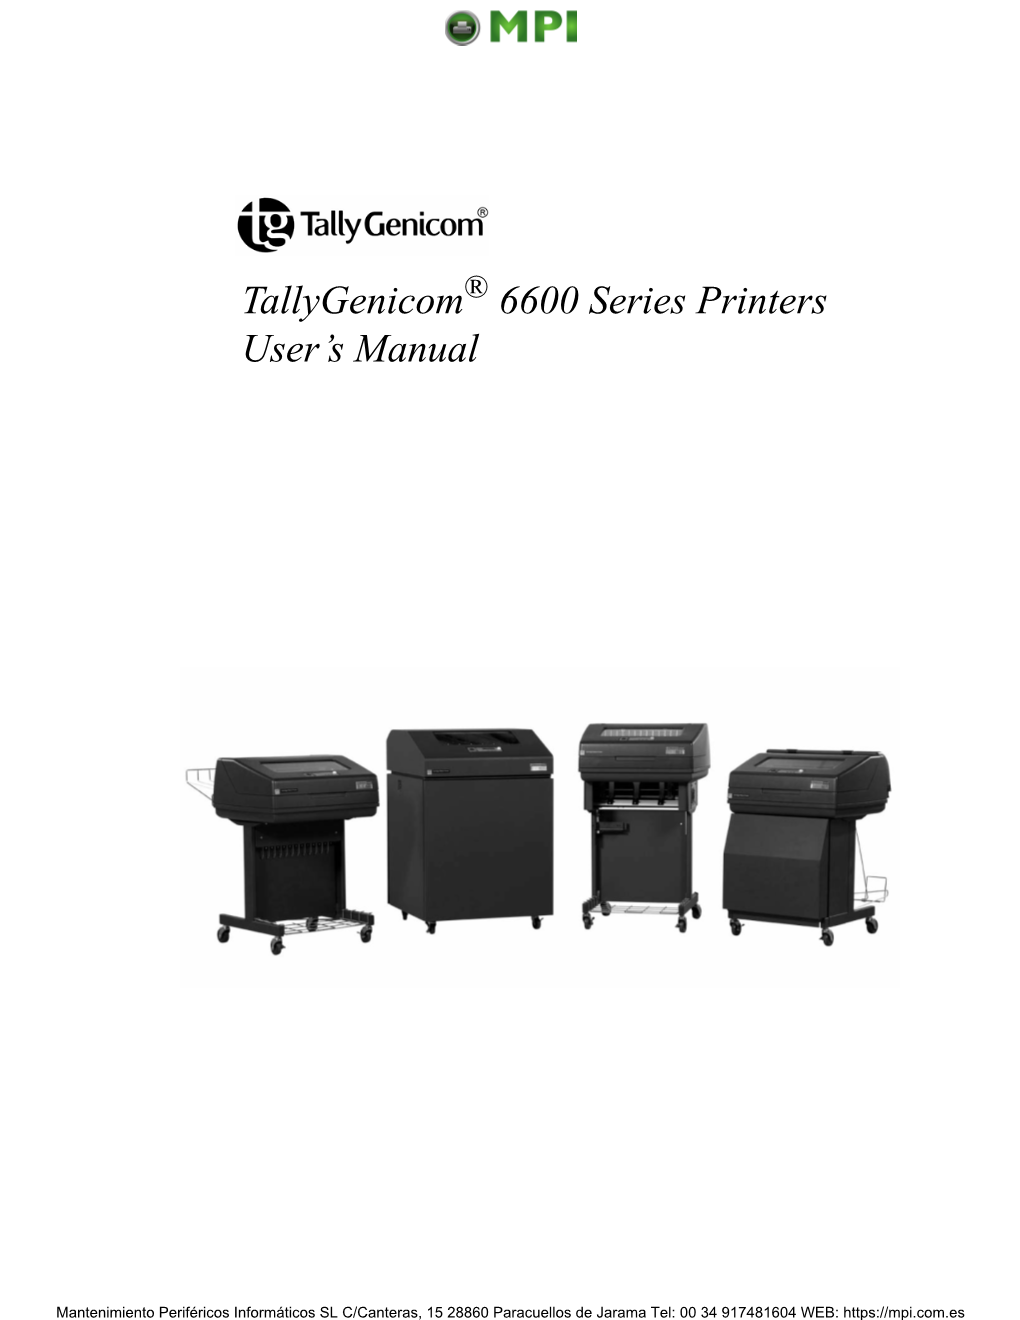 Tallygenicom 6600 Series Printers User's Manual